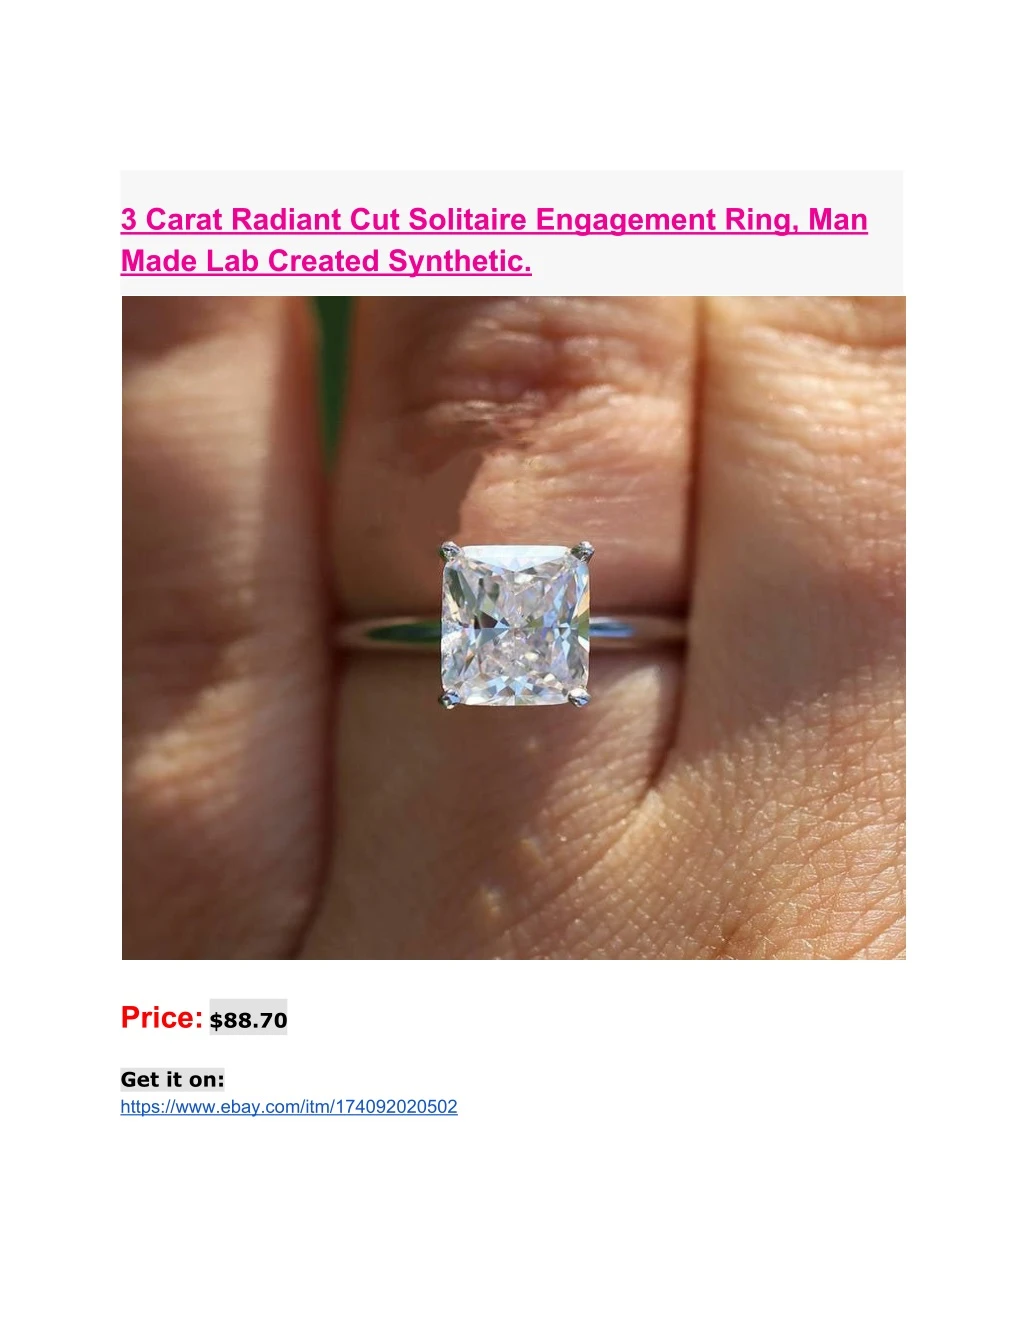 3 carat radiant cut solitaire engagement ring